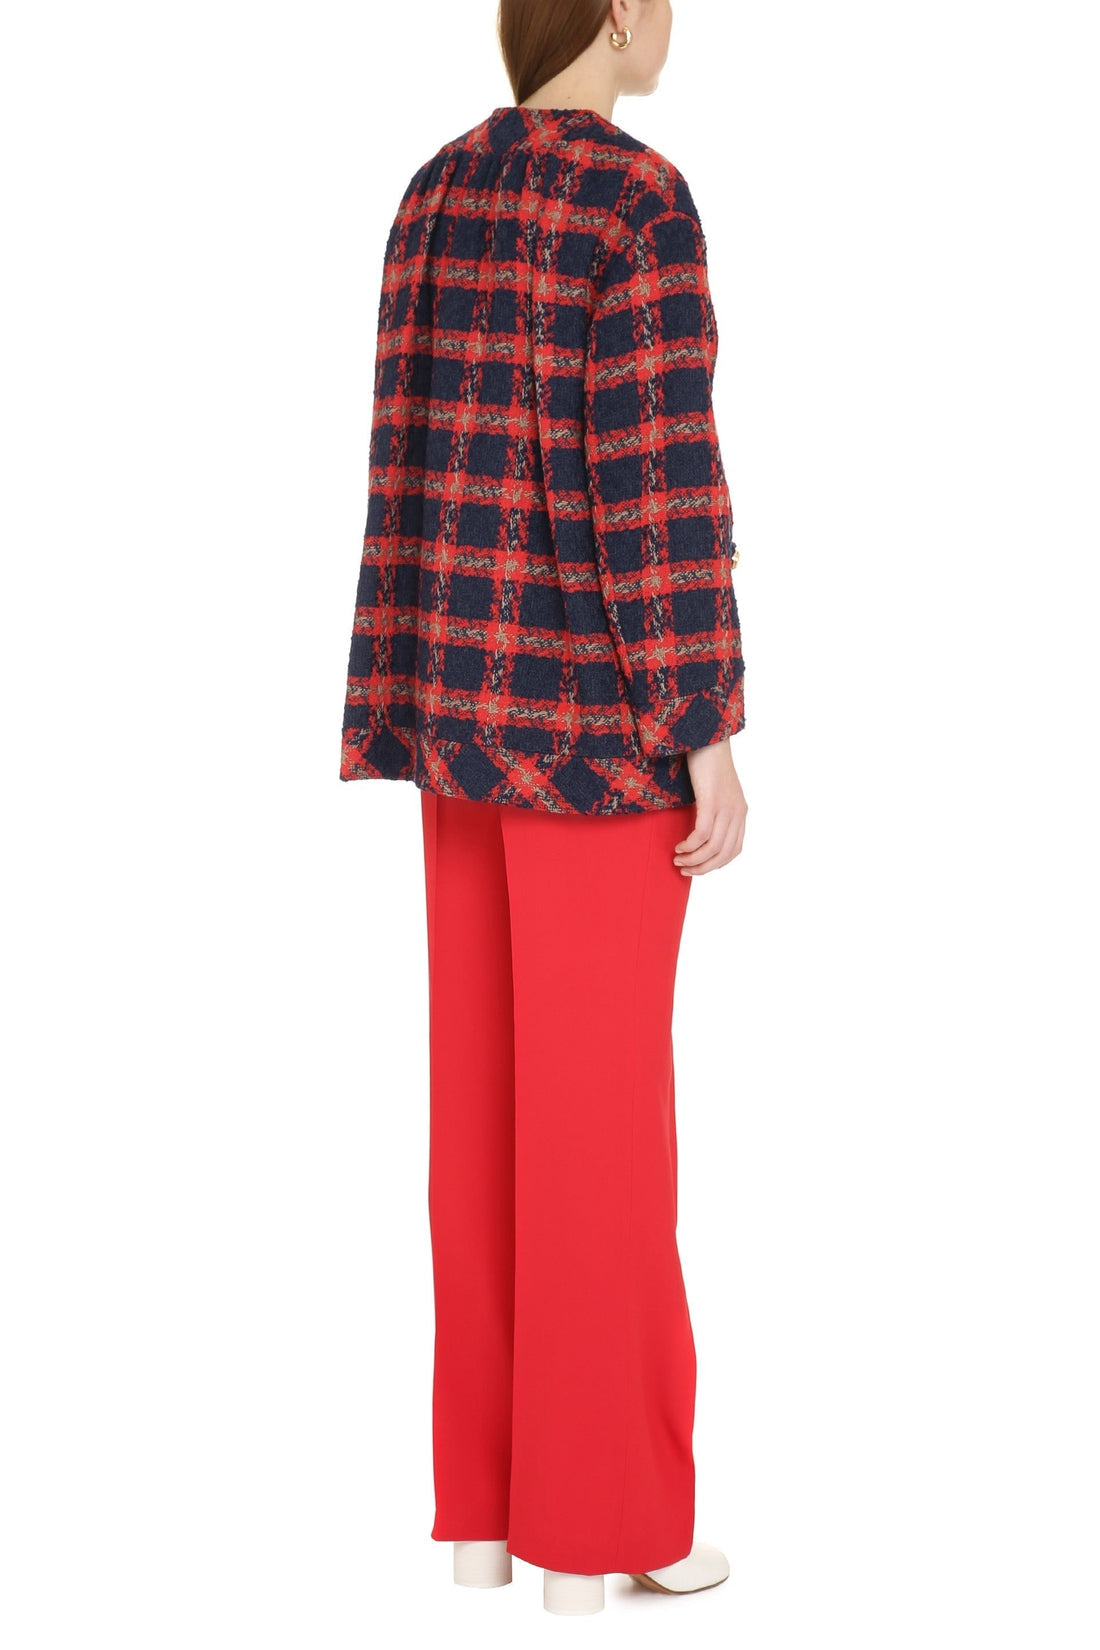 Gucci-OUTLET-SALE-Wool blend tweed jacket-ARCHIVIST